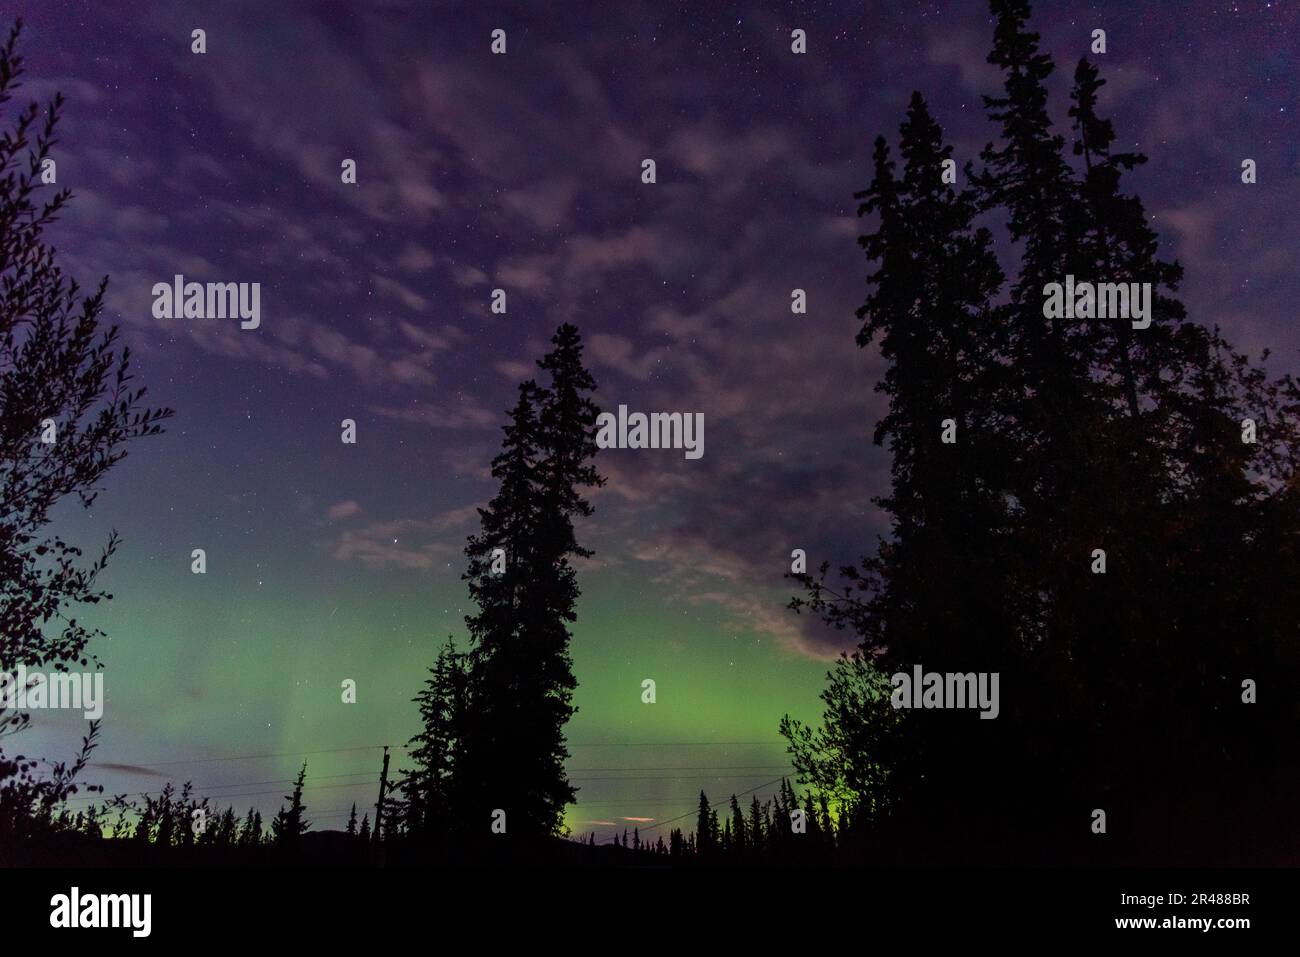 Astonishing, amazing northern lights aurora borealis seen in Yukon Territory, northern Canada in fall autumn. Trees, woods and green sky. Stock Photo